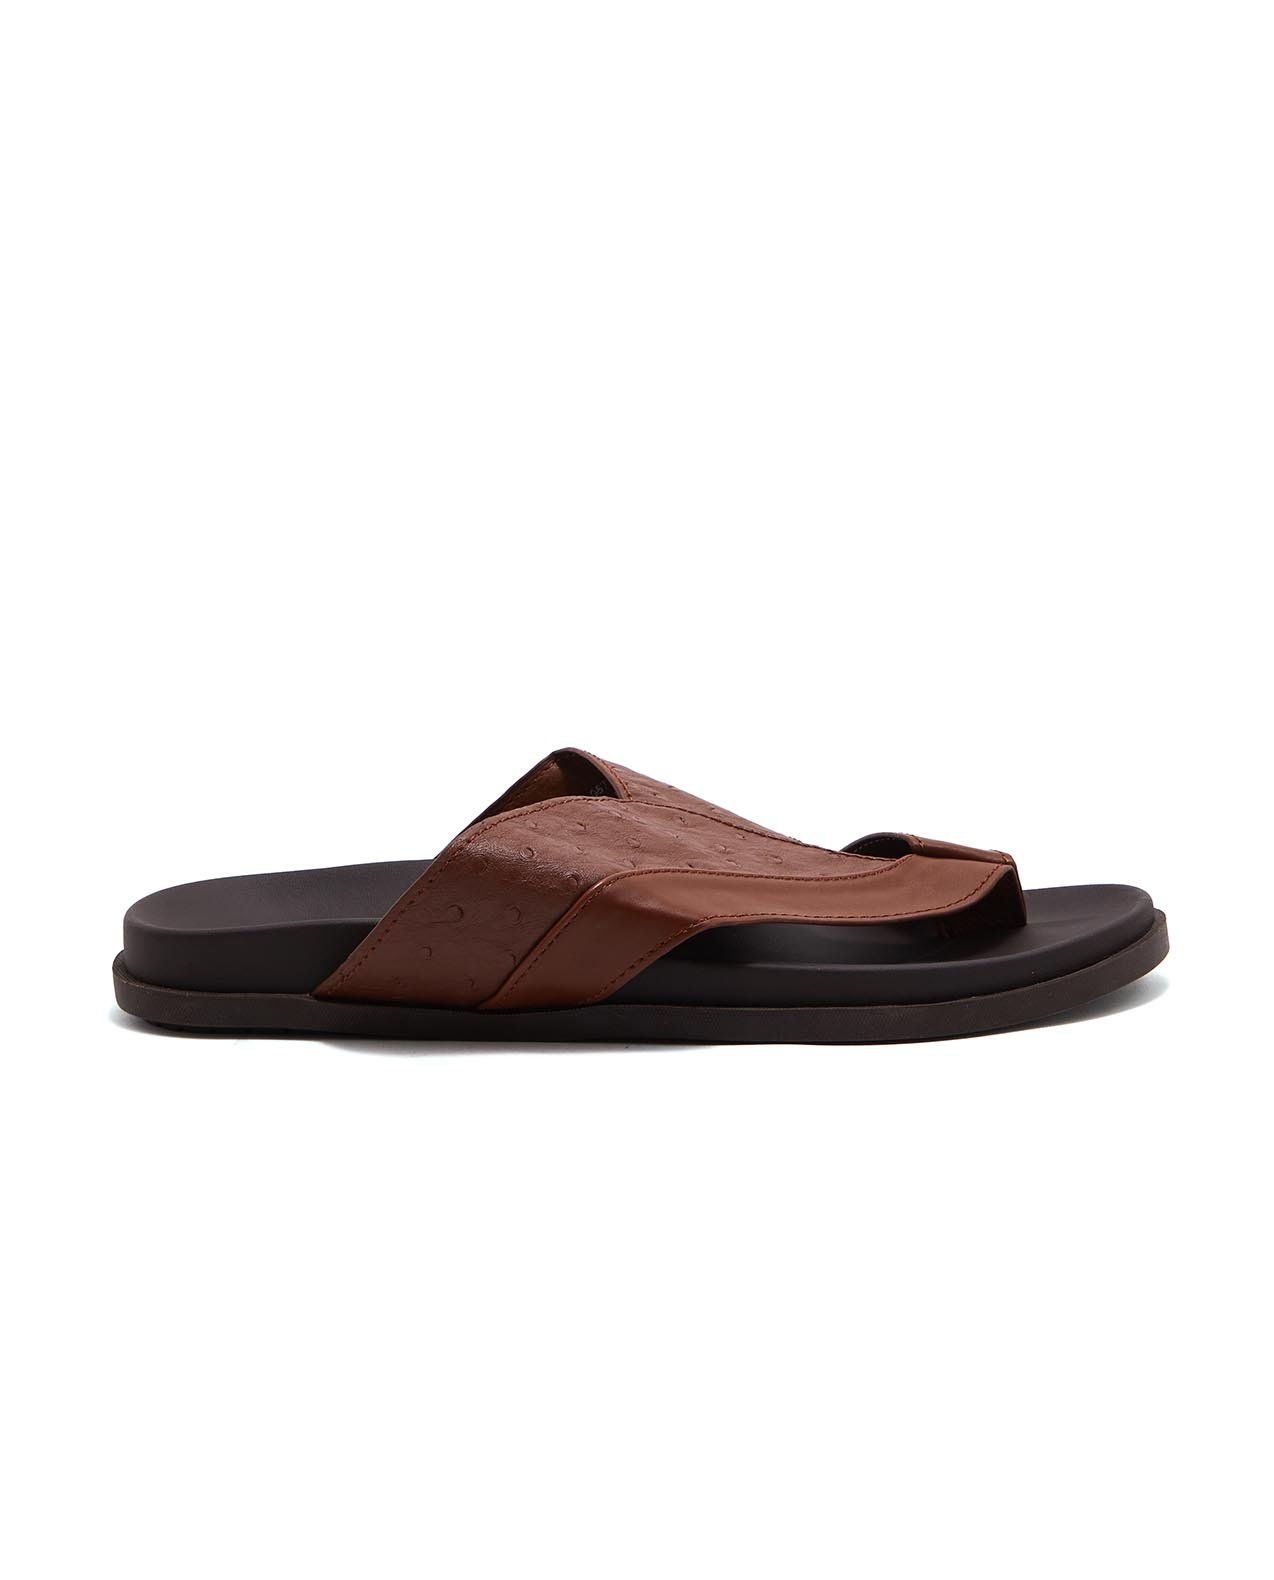 Shop One-Toe Comfort Sandals Online | R&B UAE